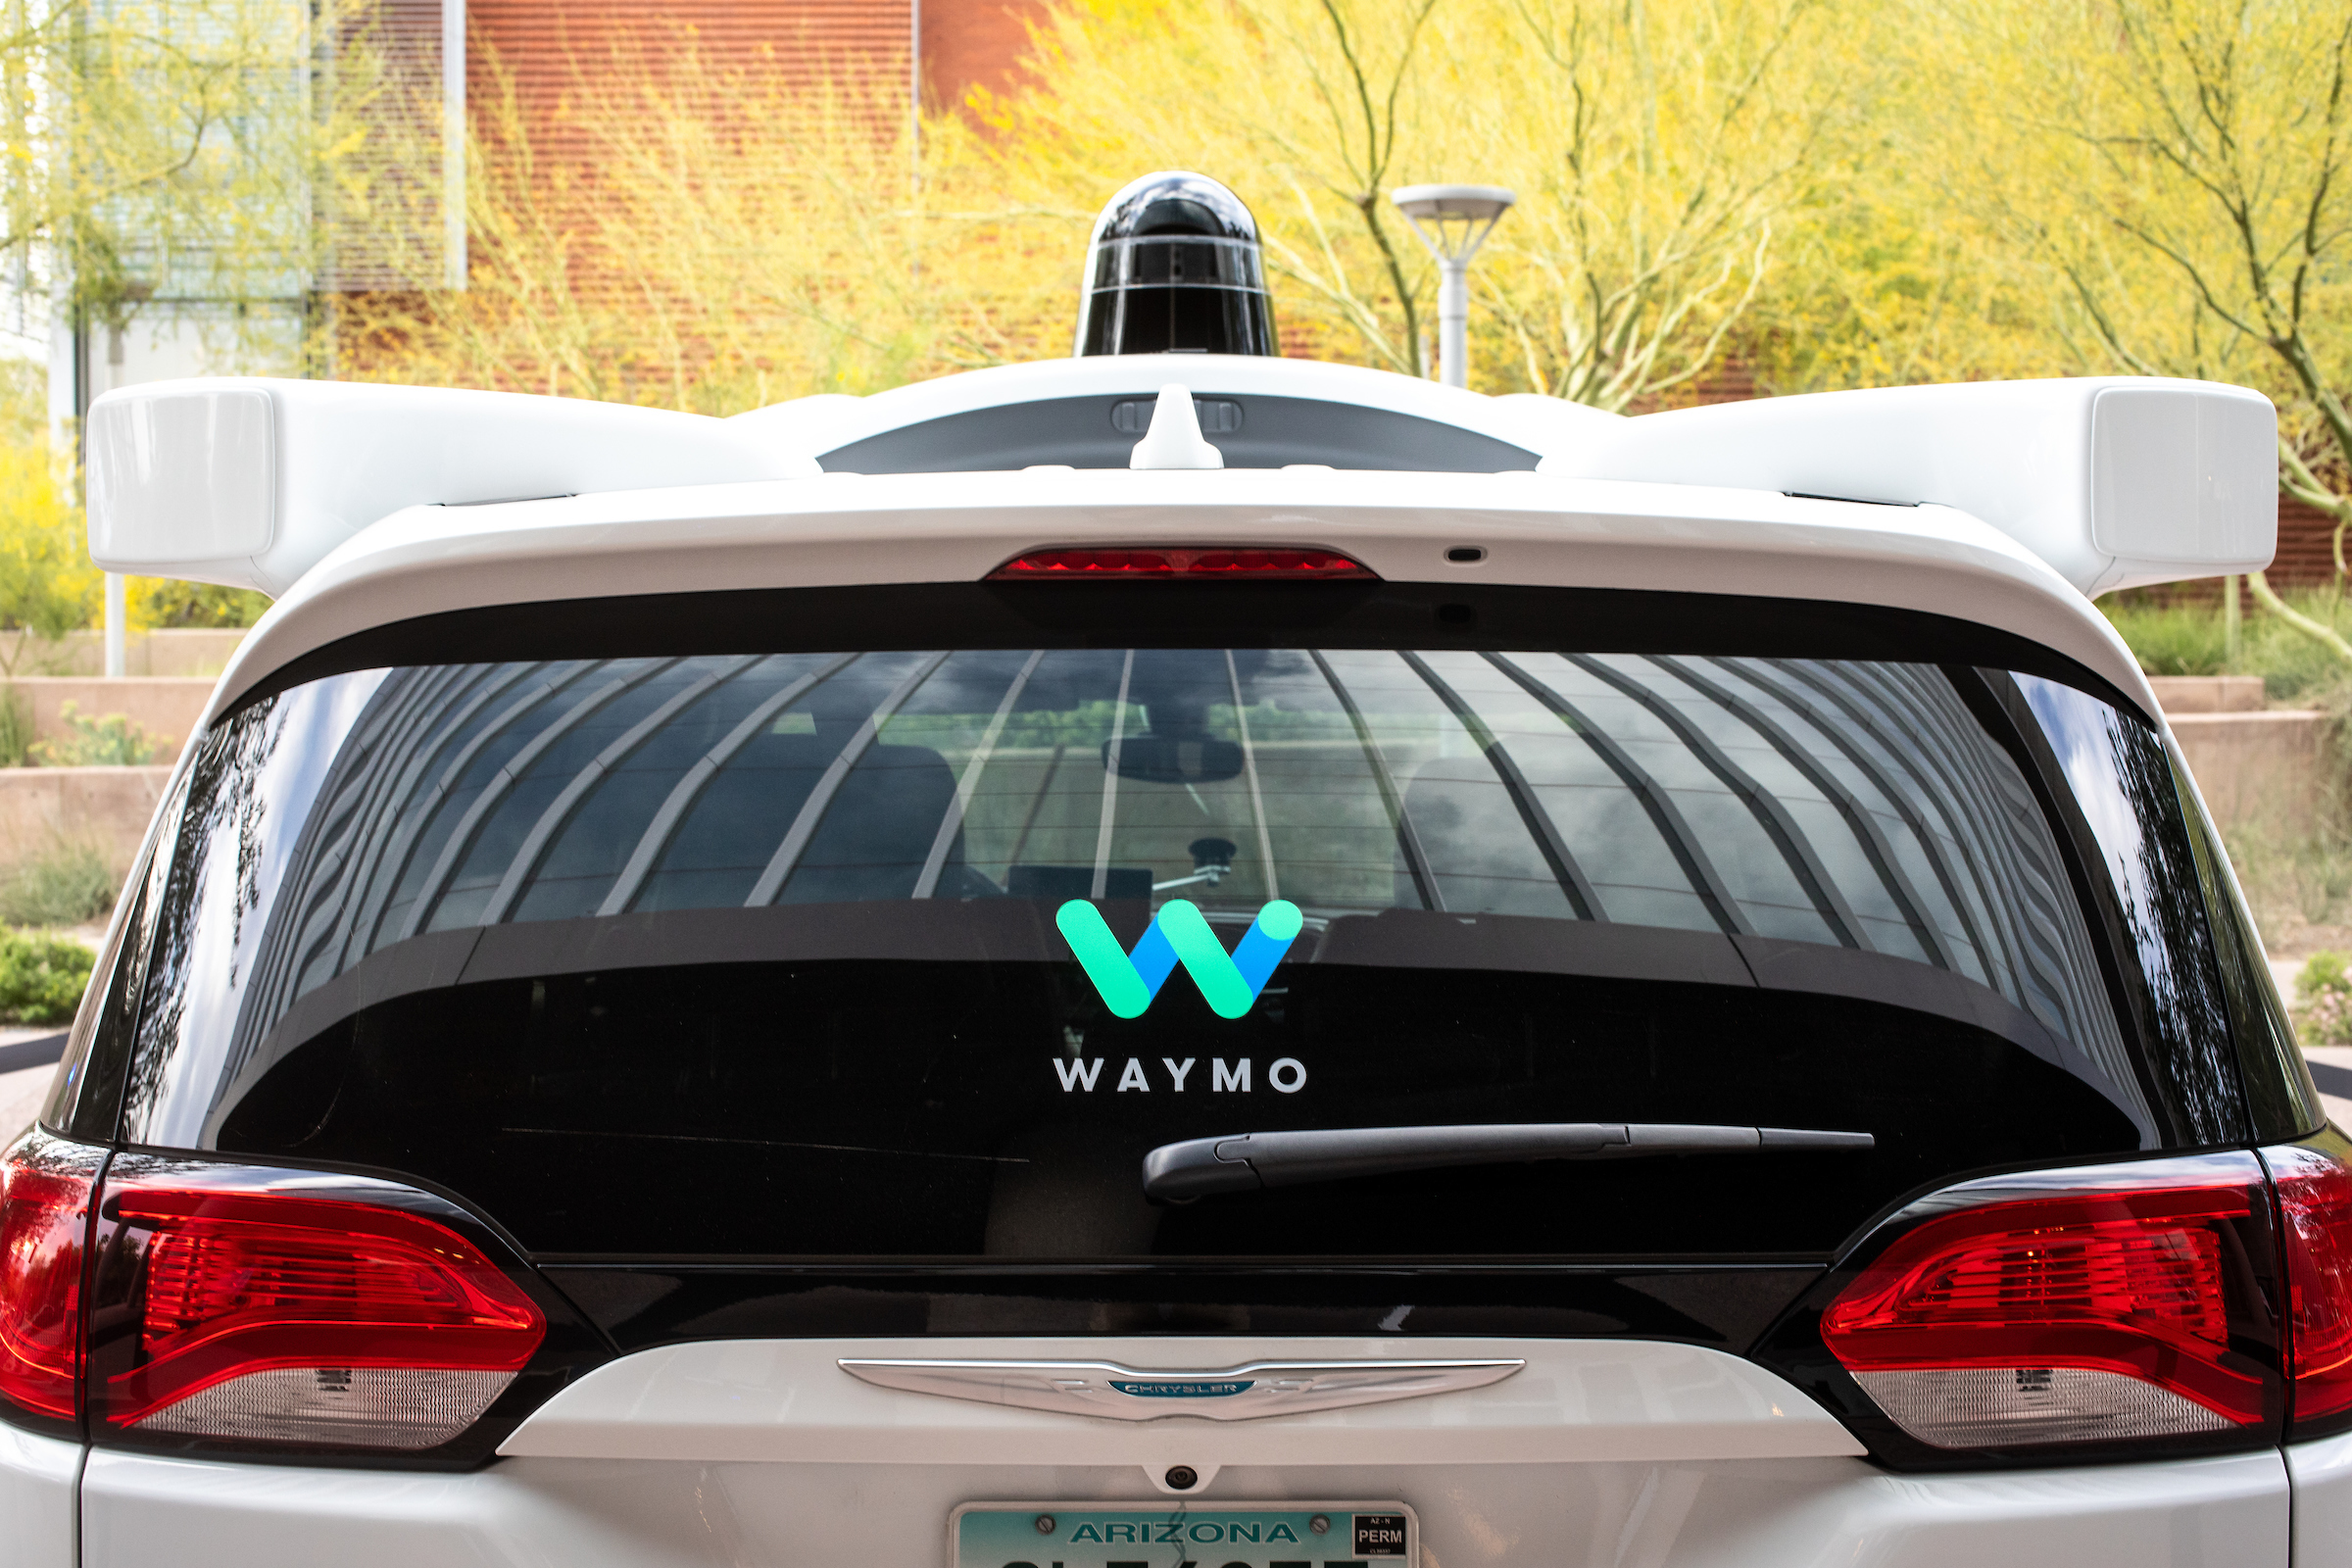 back of self-driving Waymo car